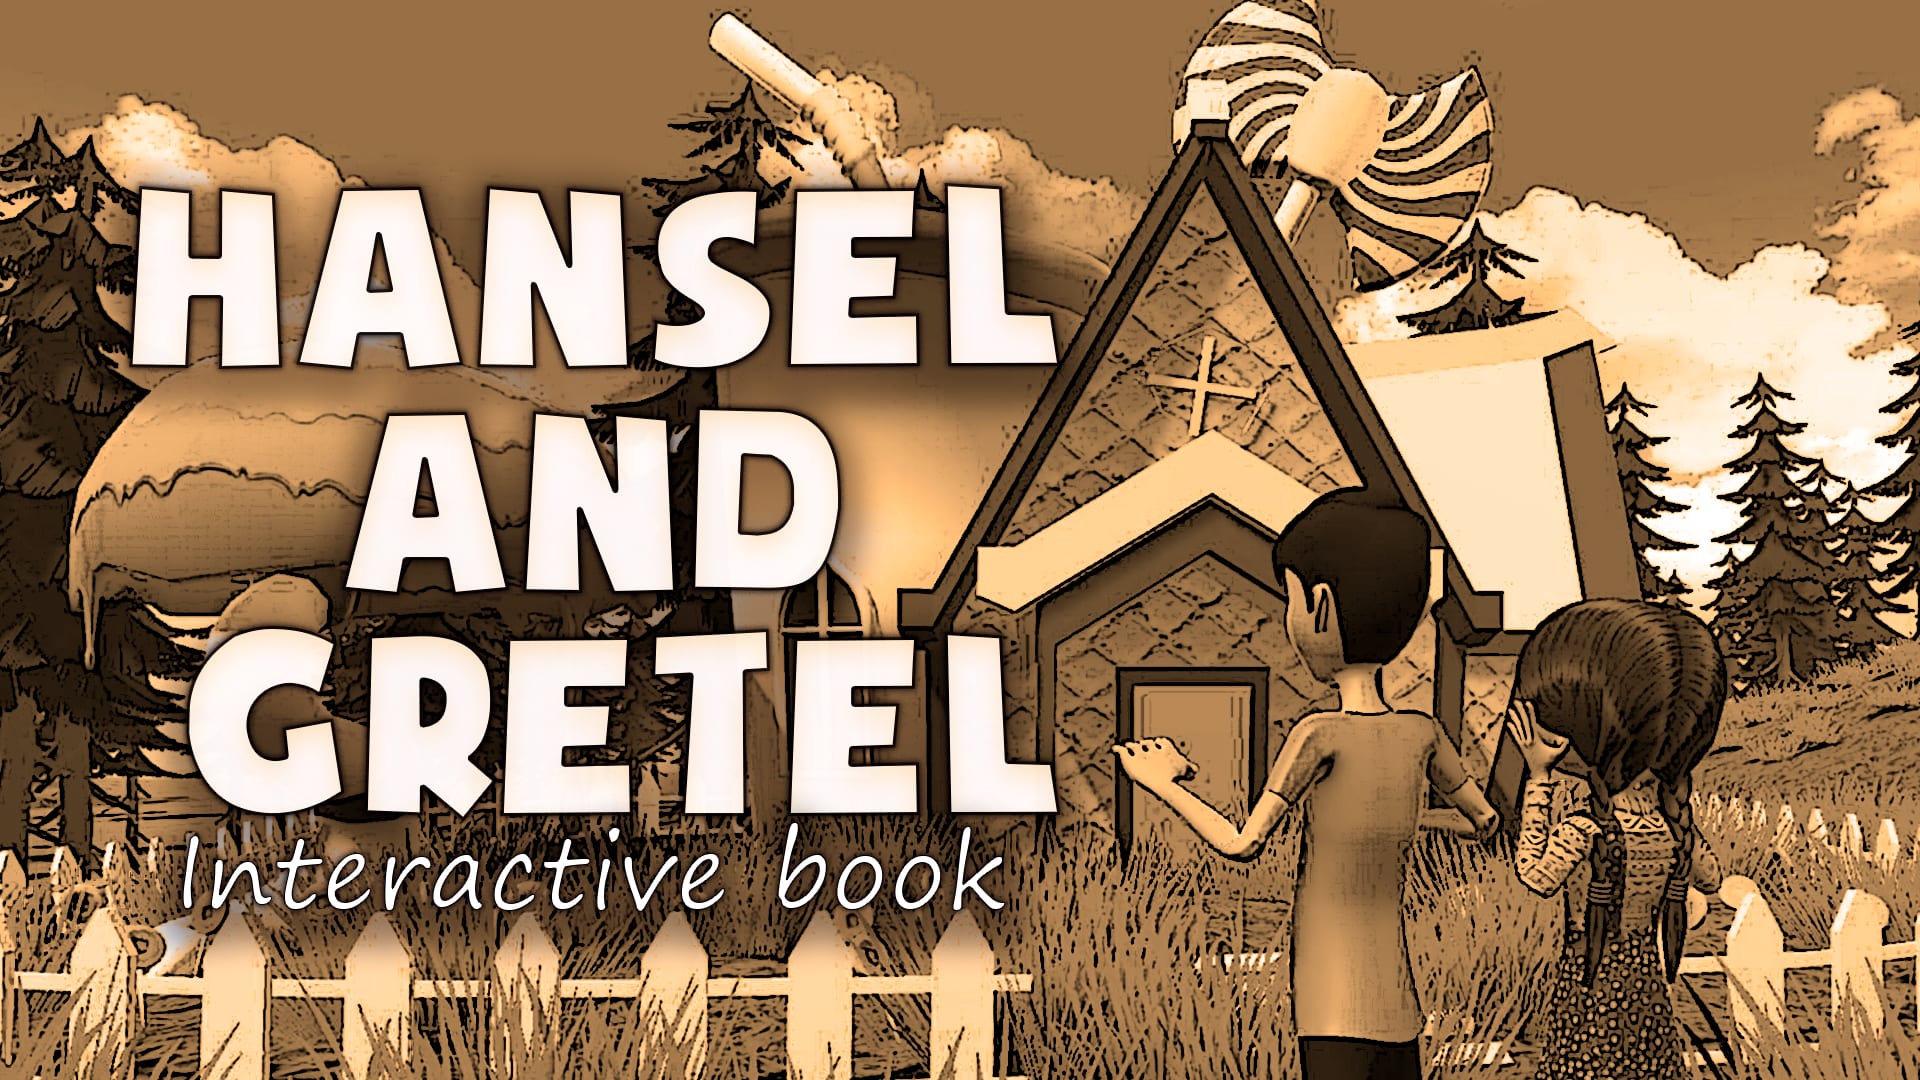 Hansel and Gretel: Interactive Book